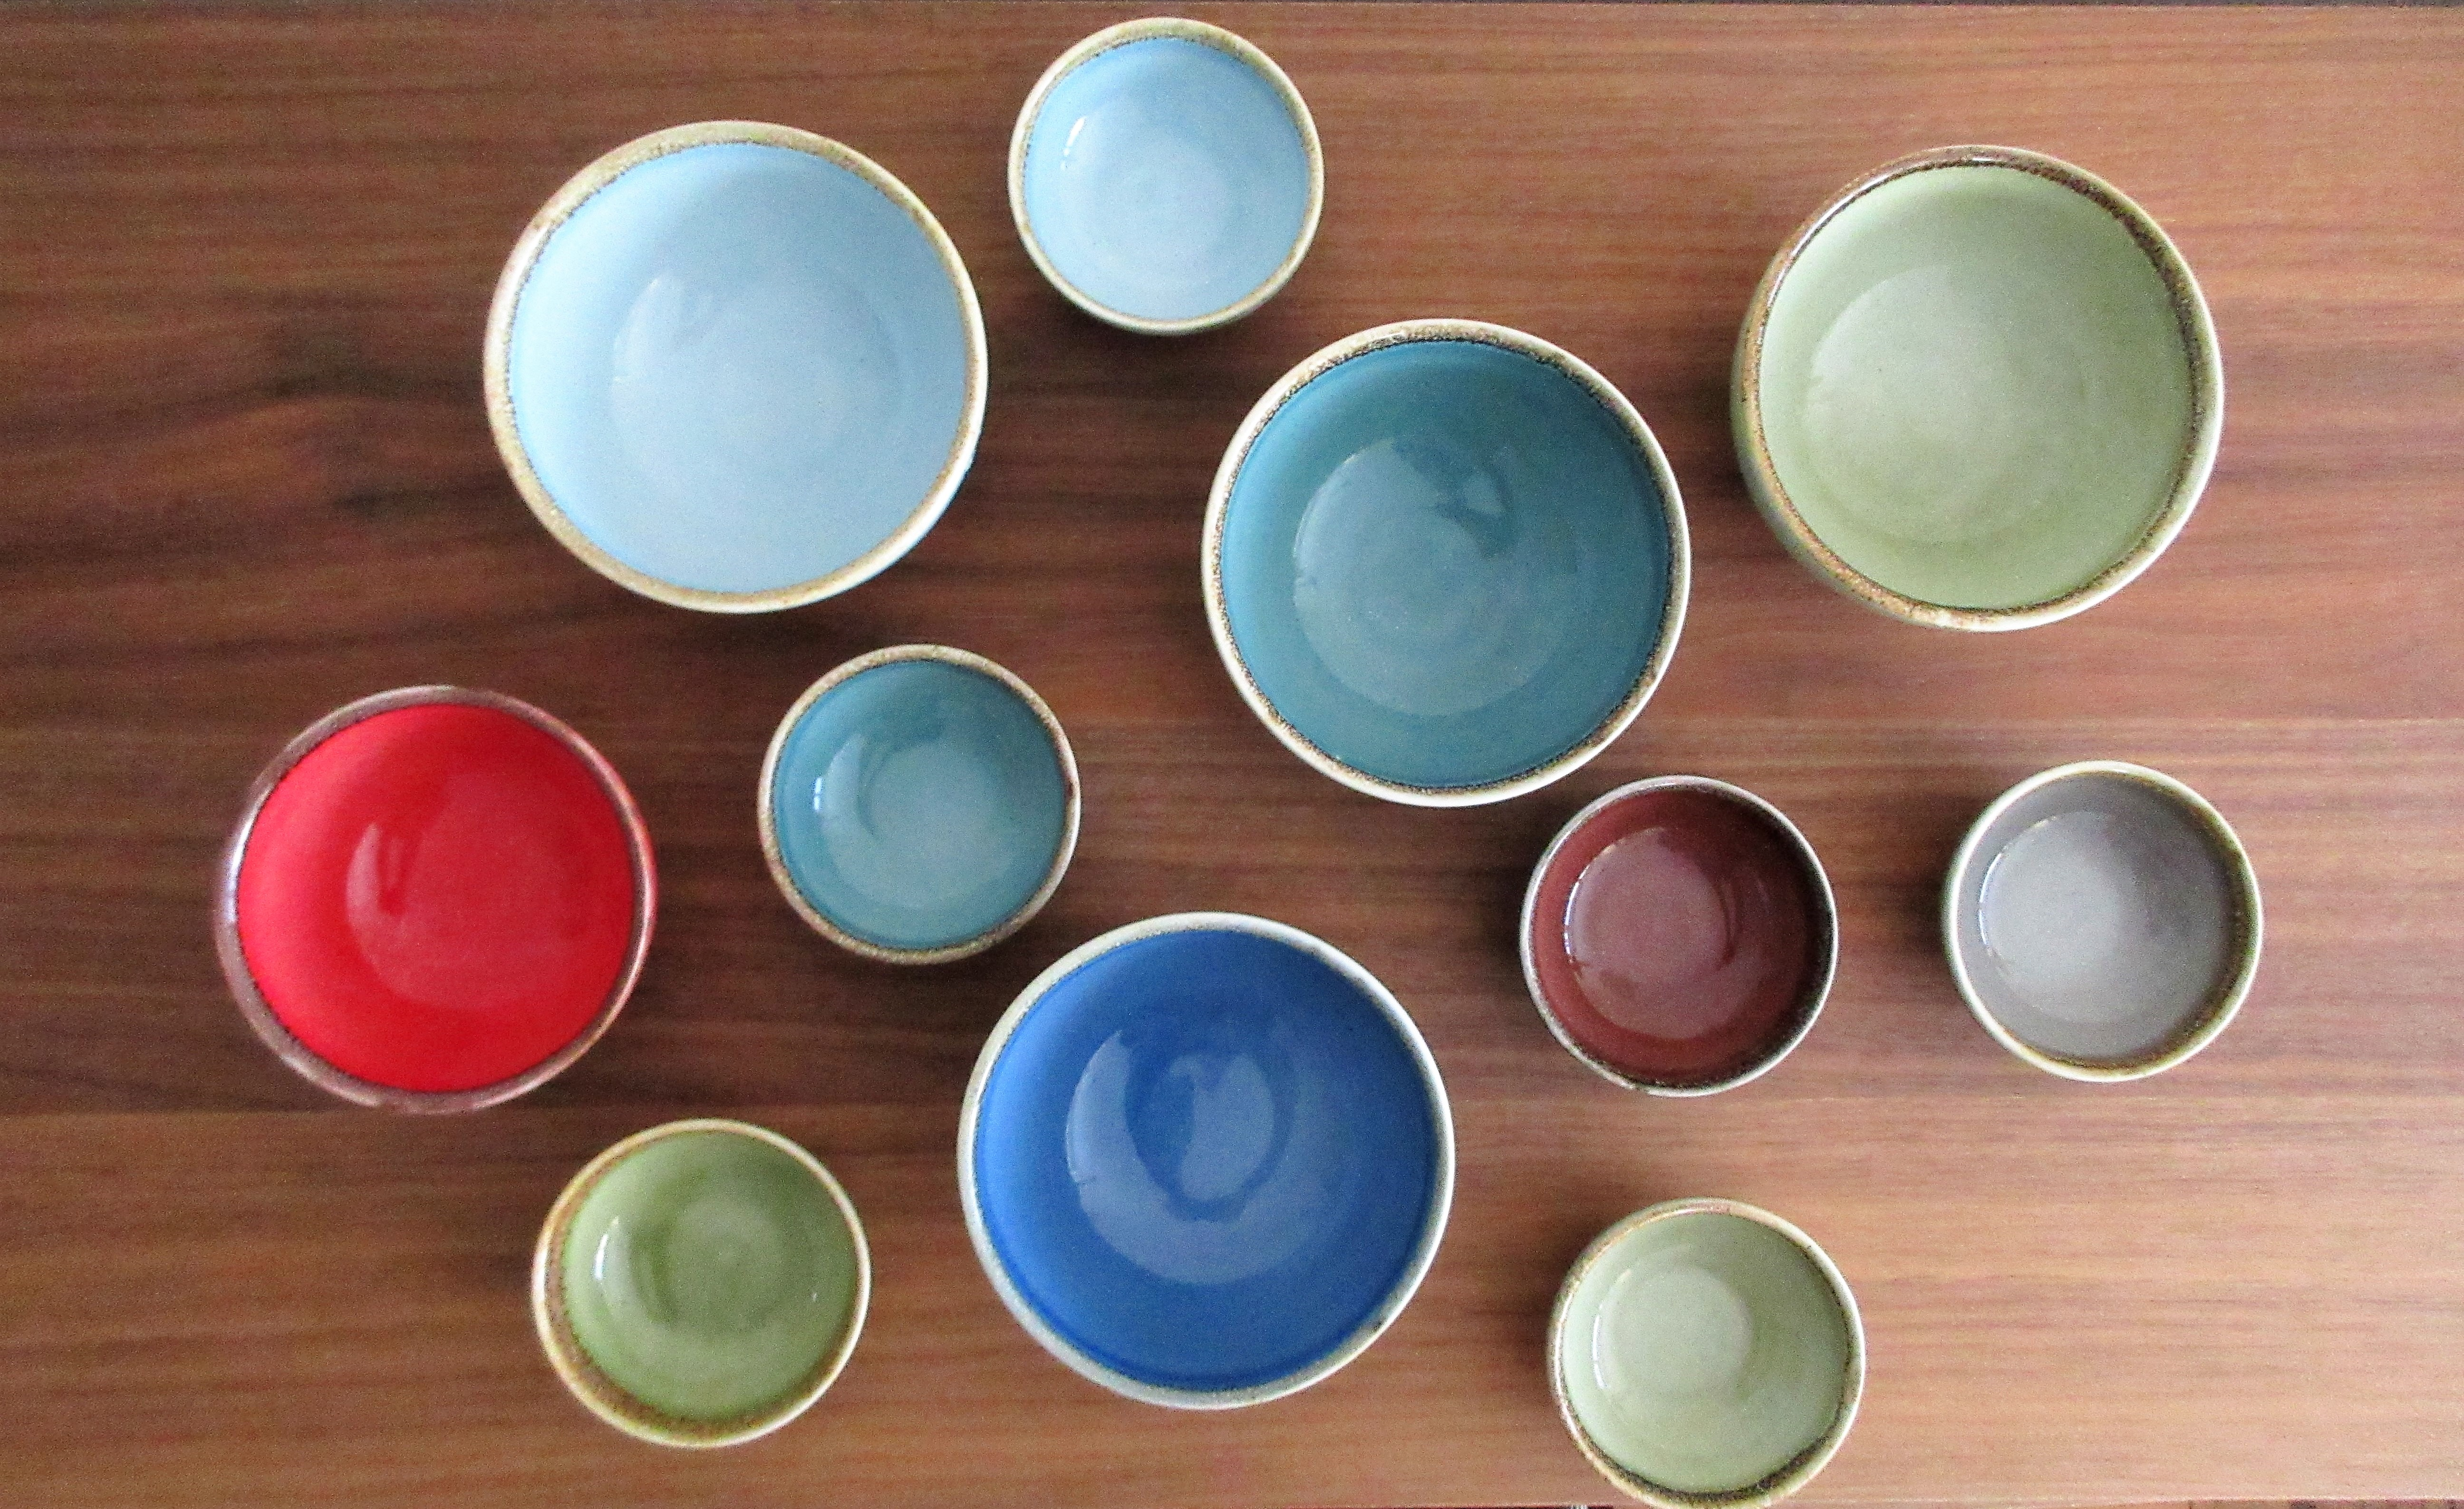 dewitt kendall mini bowls ingredient colored stoneware tabletimes blog